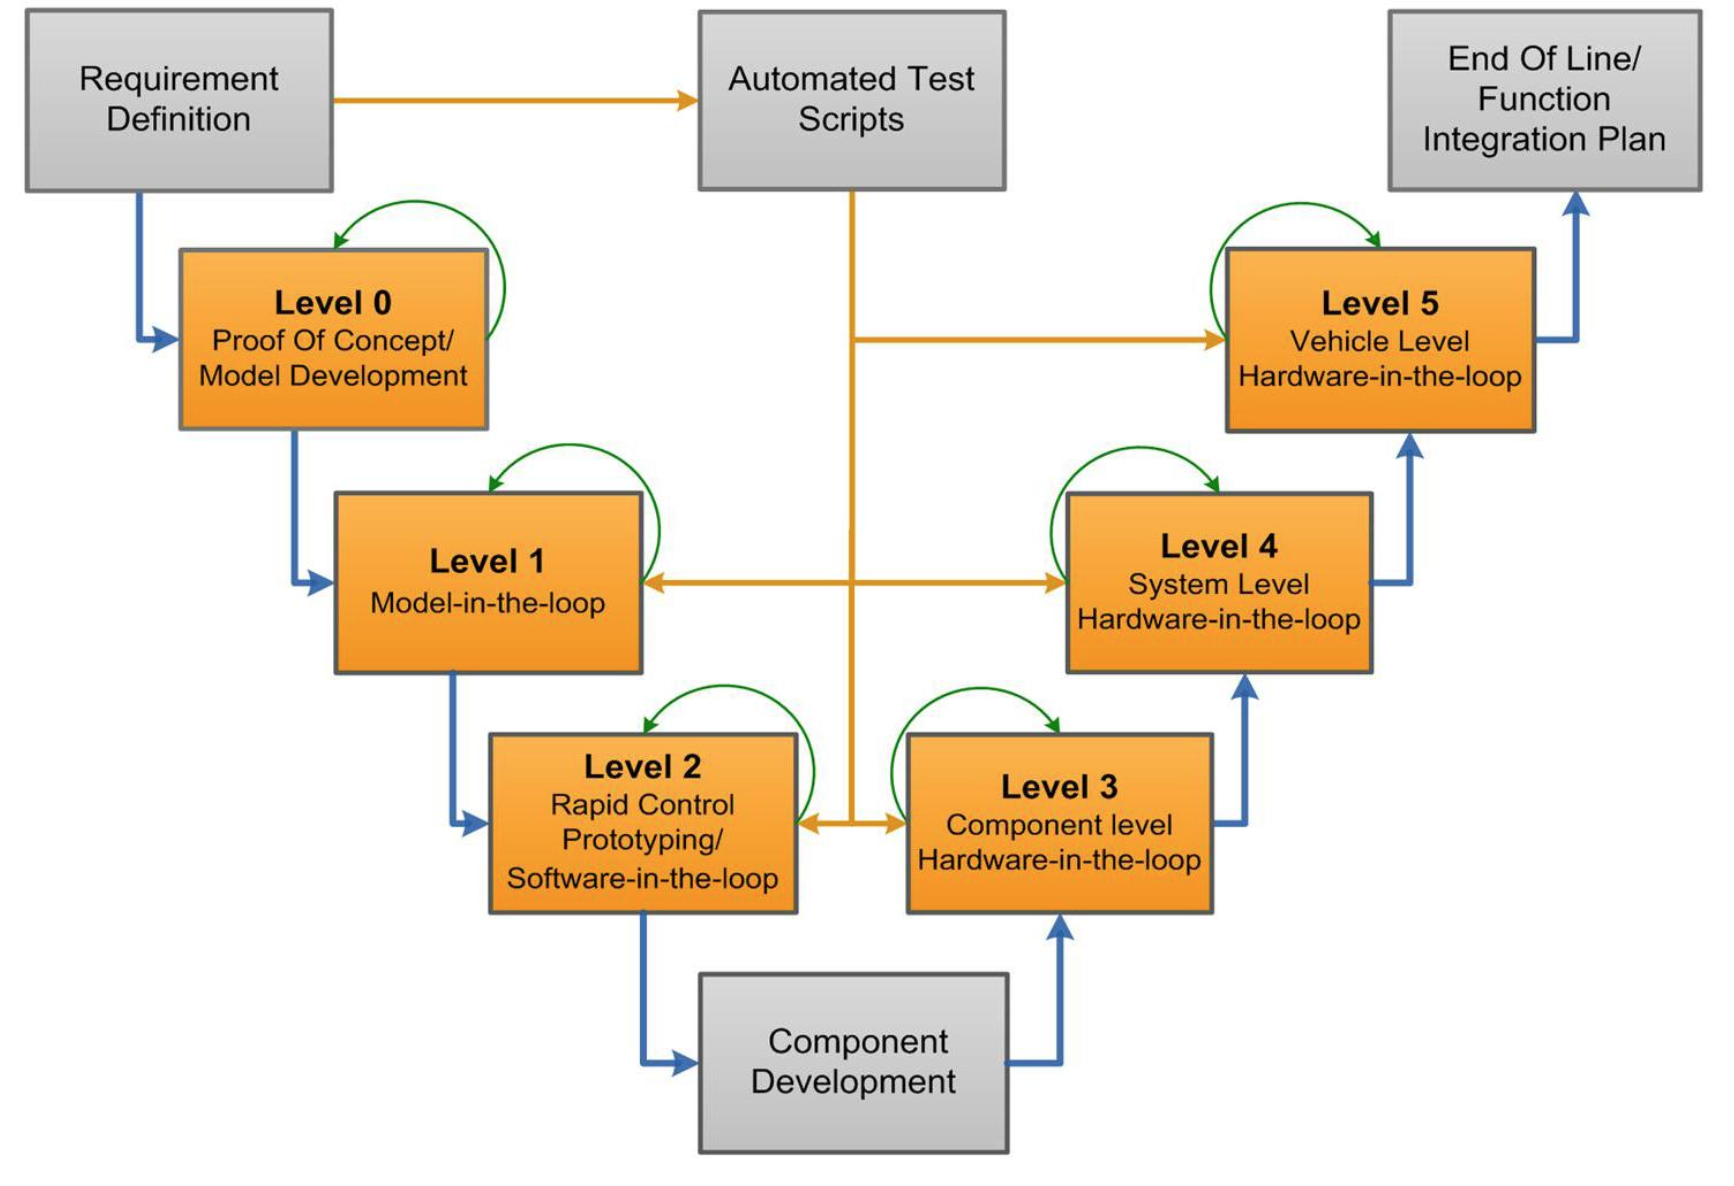 The 5-level model based development process at JLR, courtesy of JLR.